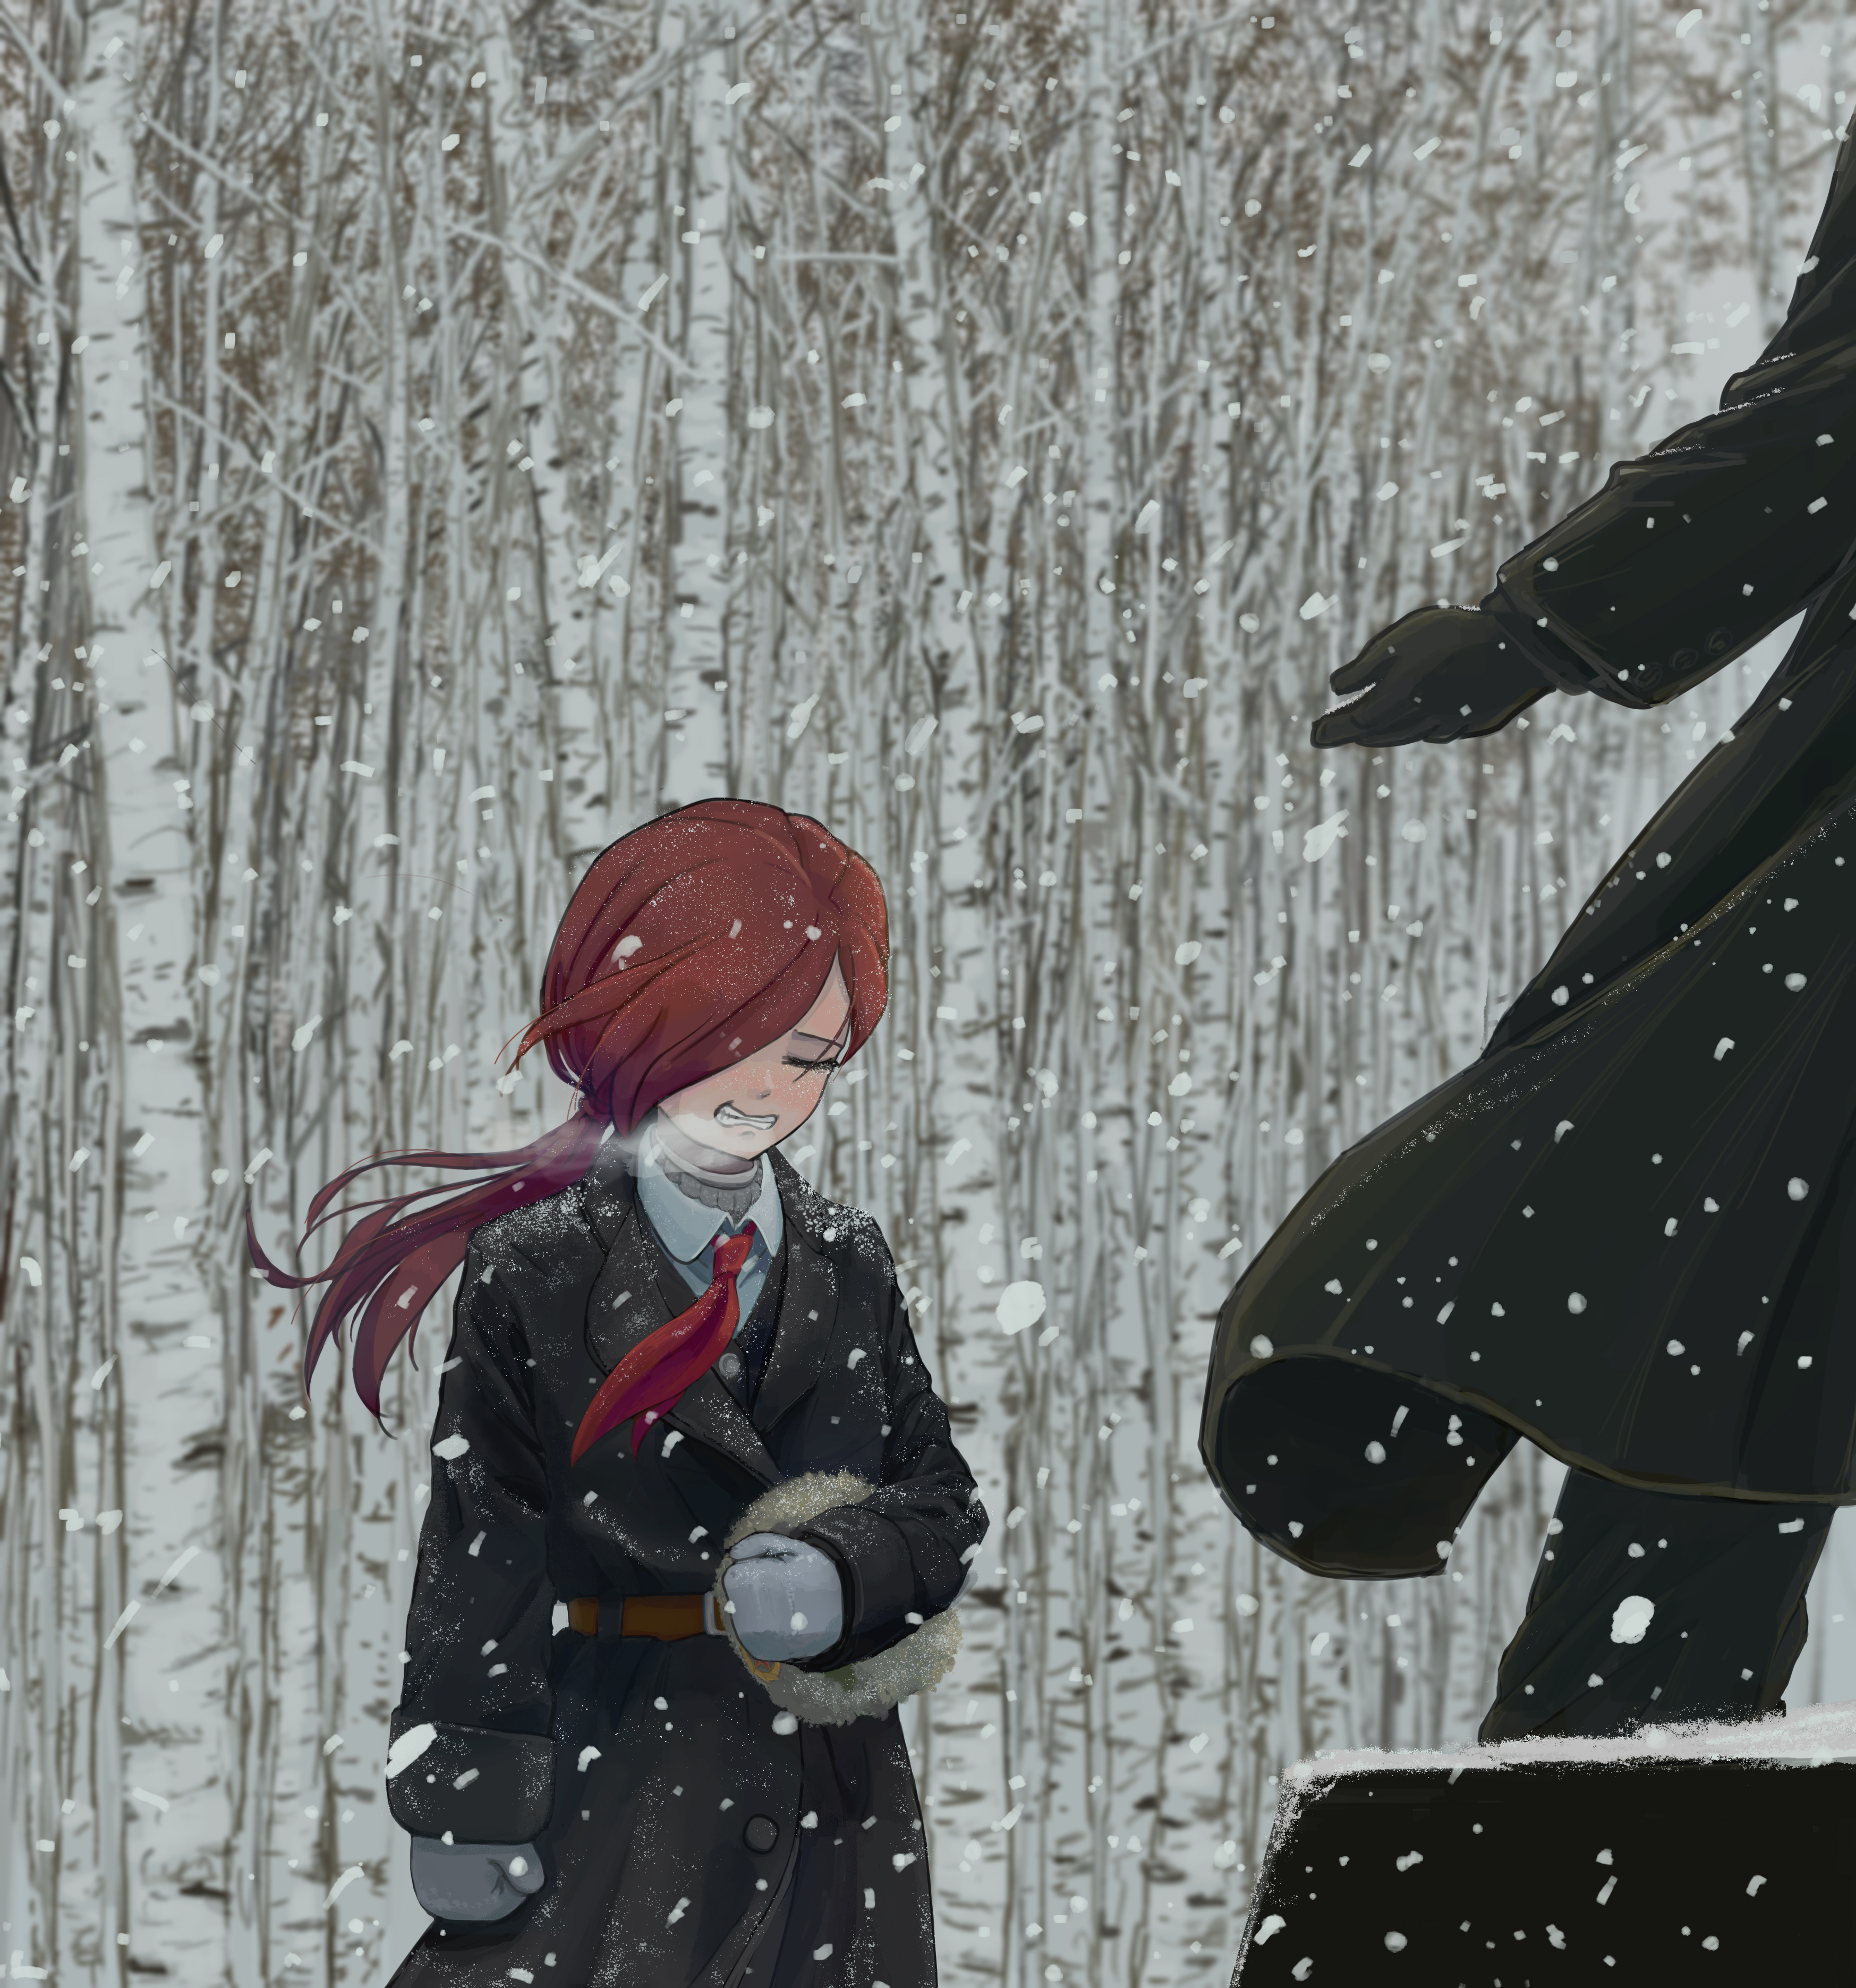 Anime Girls Communism Snow Trees Closed Eyes Redhead Tie Hair Over One Eye 3494x3742